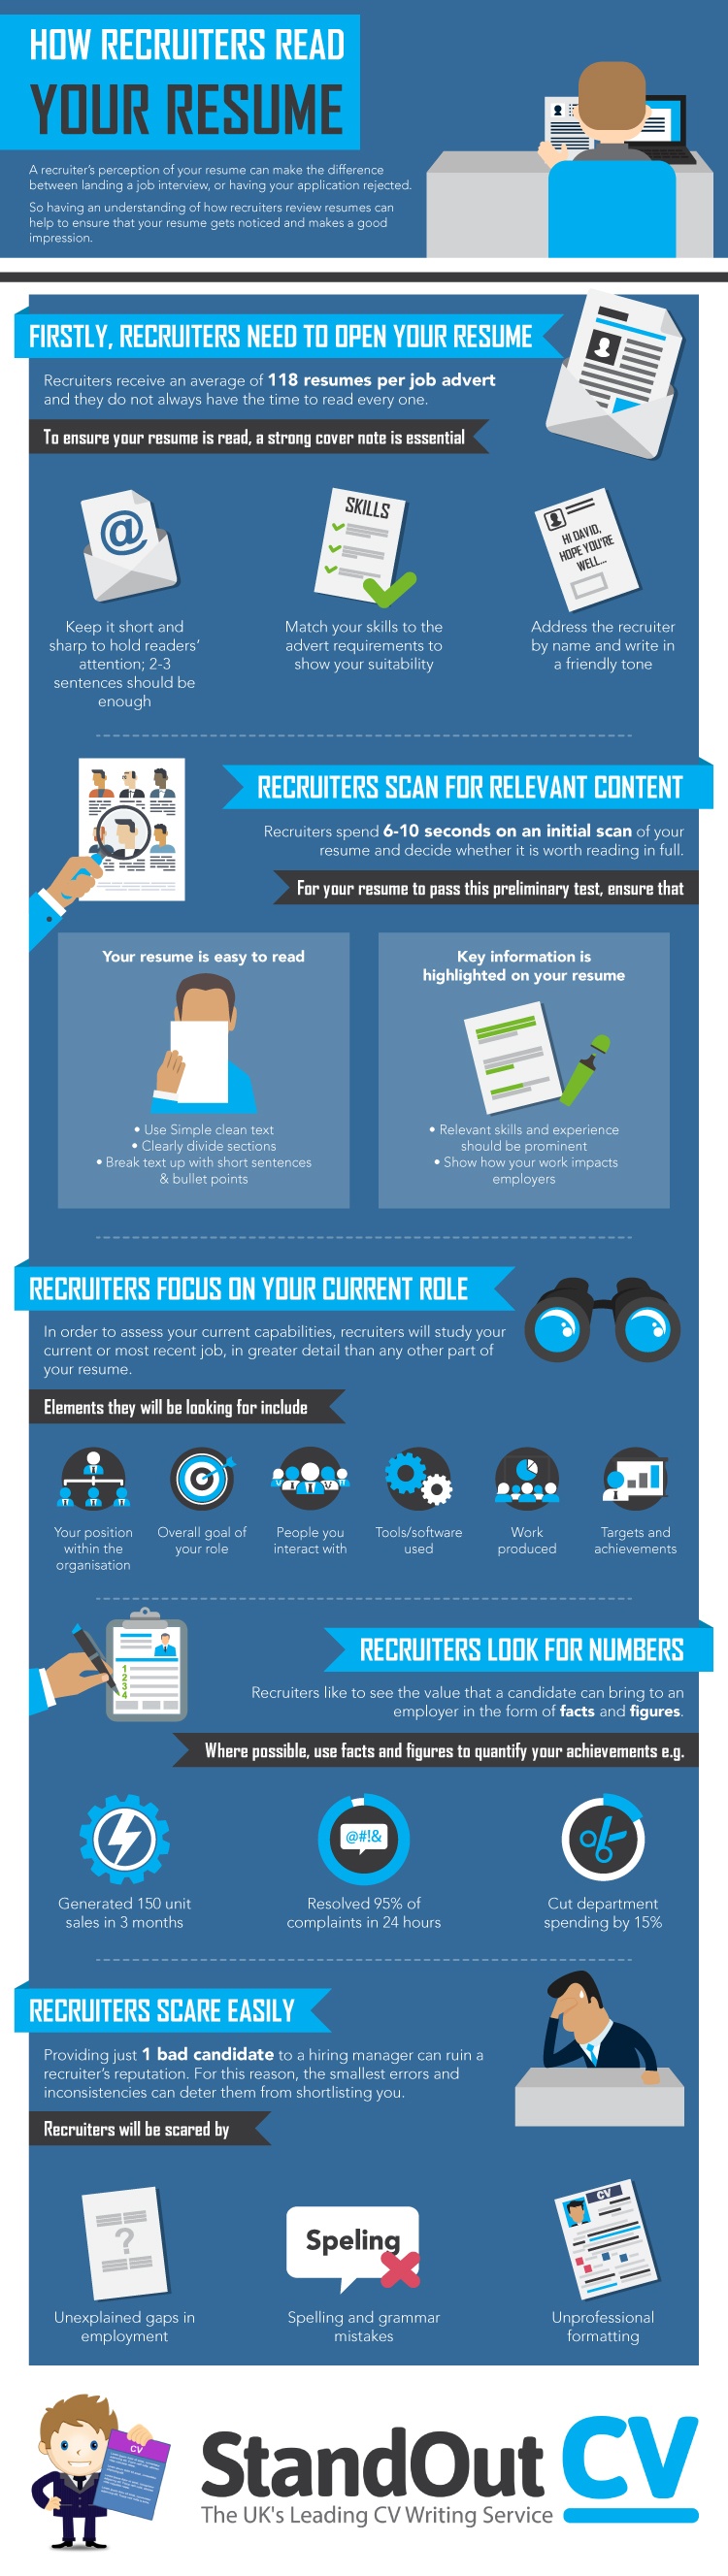 how a recruiter reads your résumé infographic